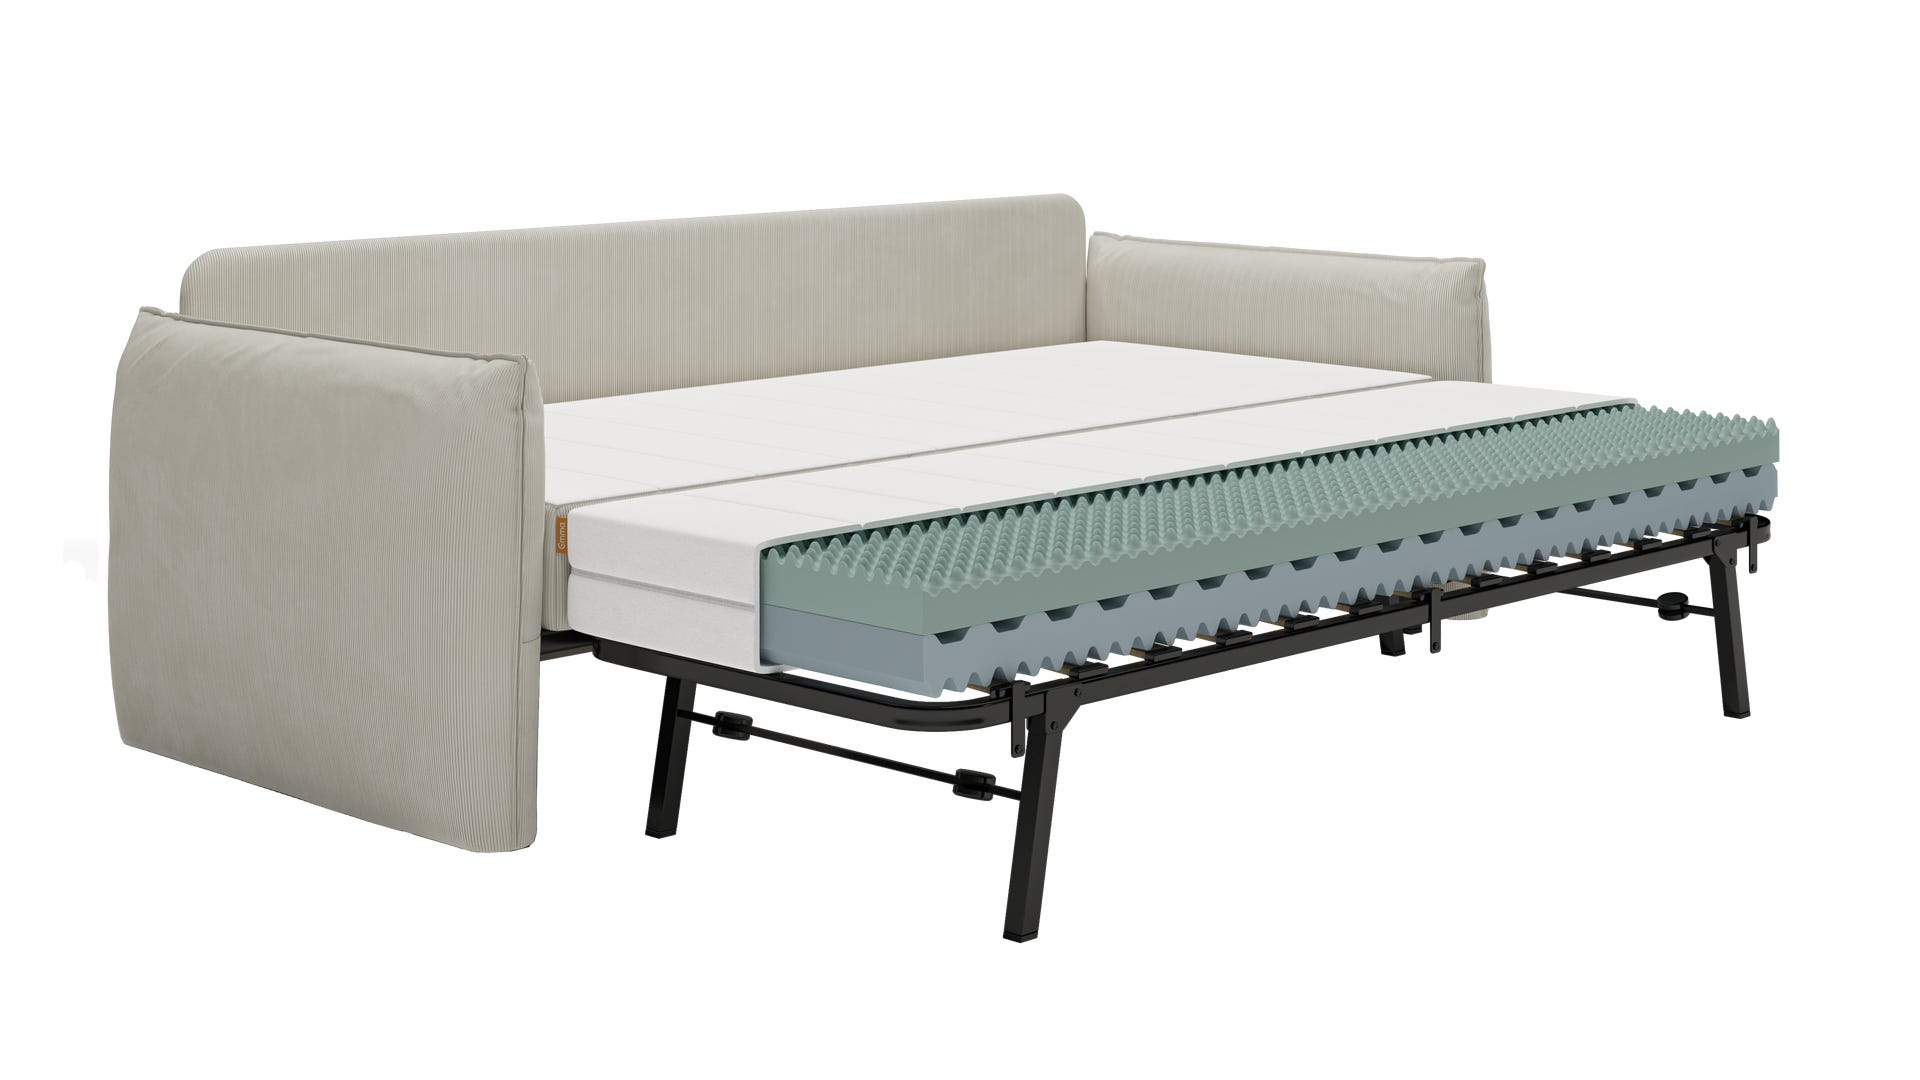 Emma Sofa Bed - adjustable mattress for best support.